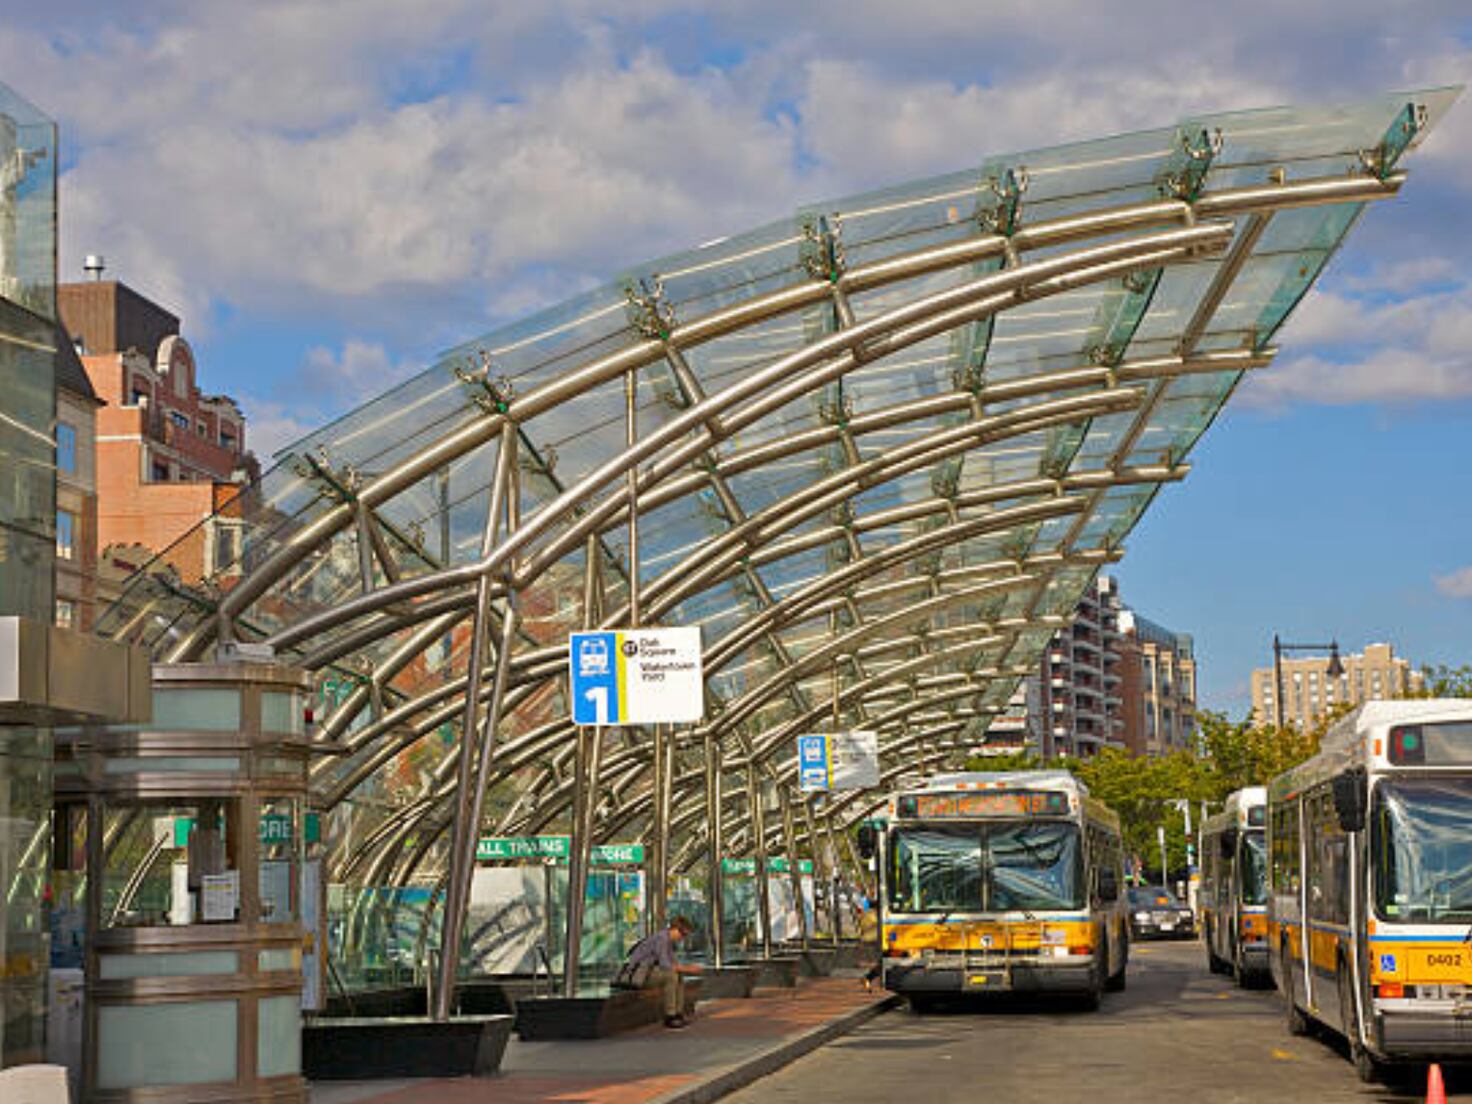 Washington Square Transit Center - Wikipedia